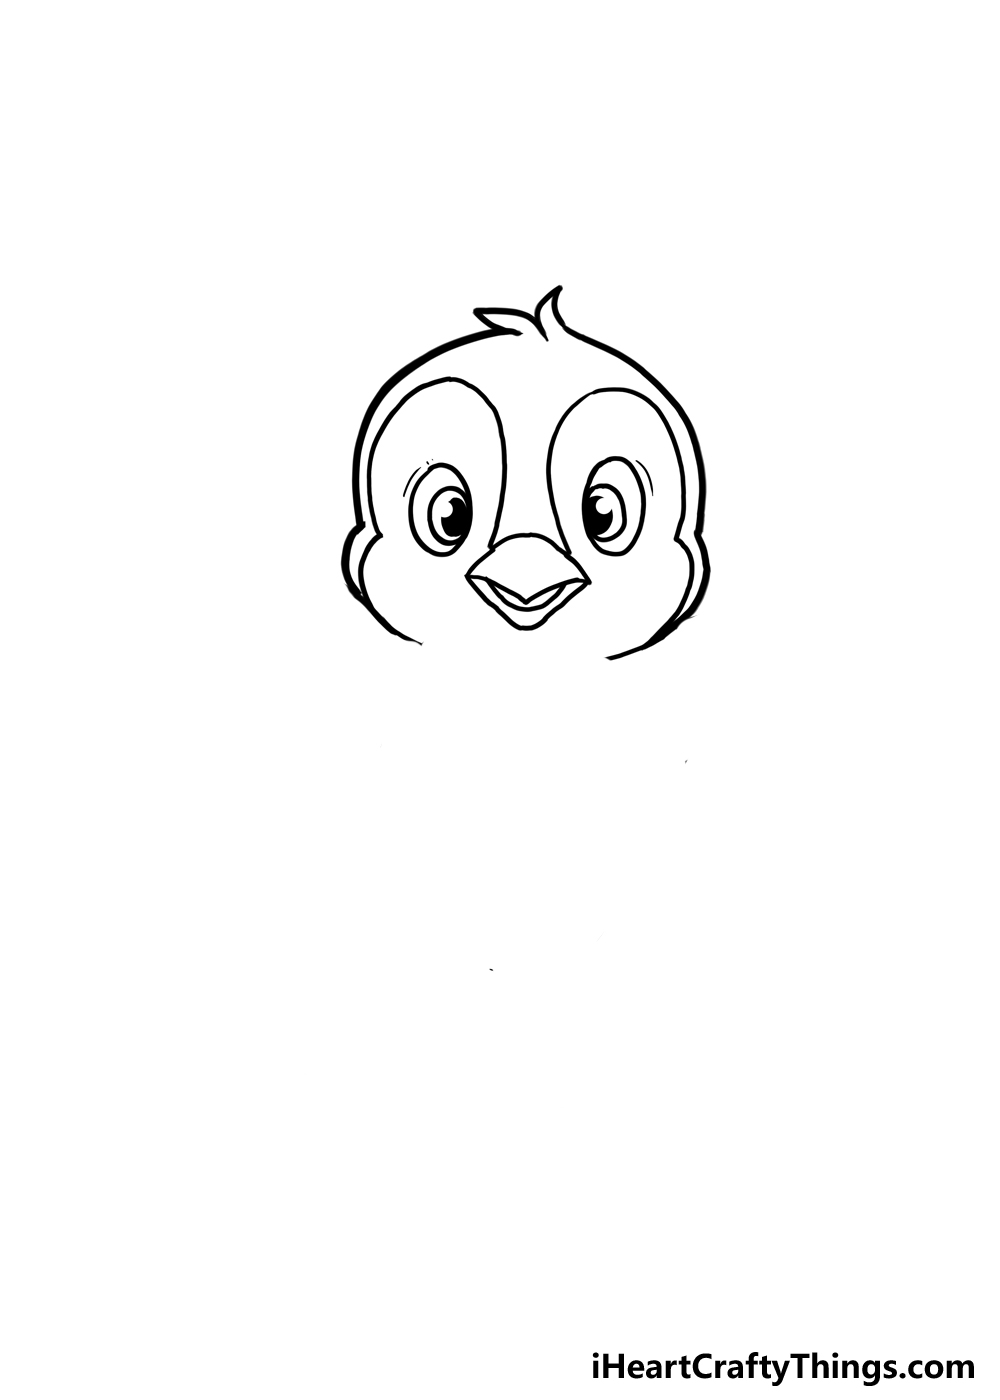 How to Draw A Cartoon Penguin step 3